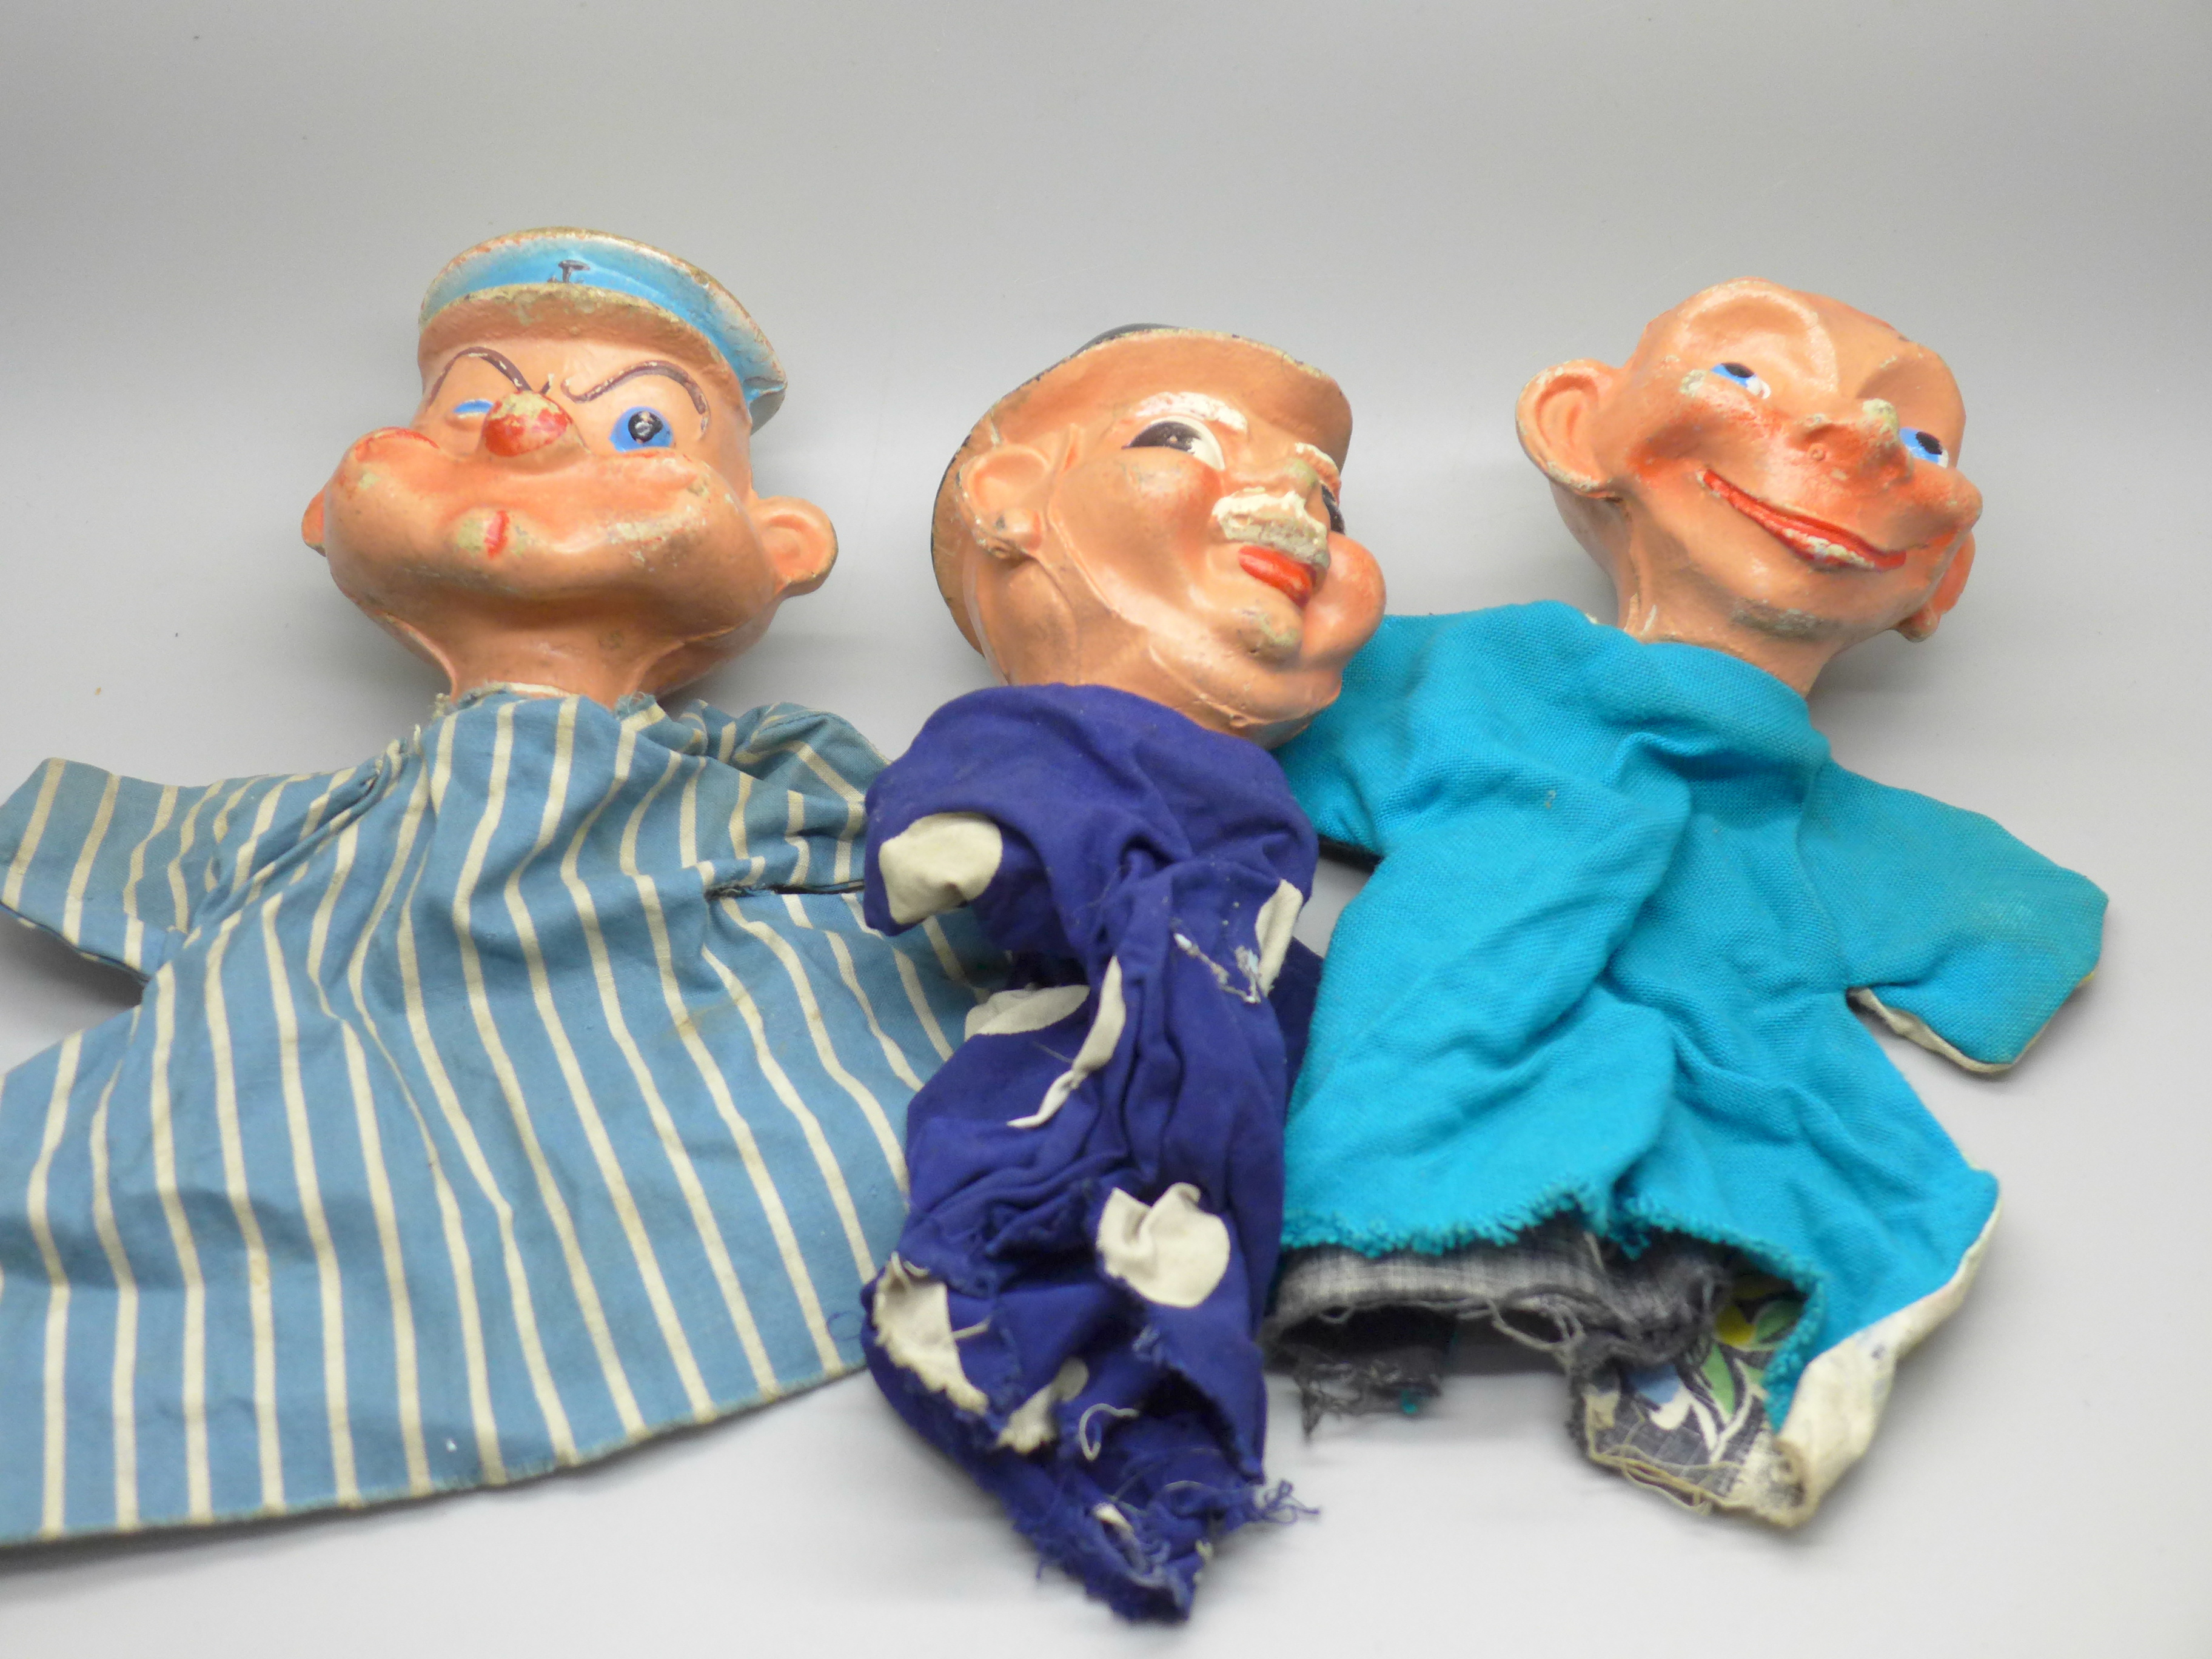 Three glove puppets/dolls including Popeye